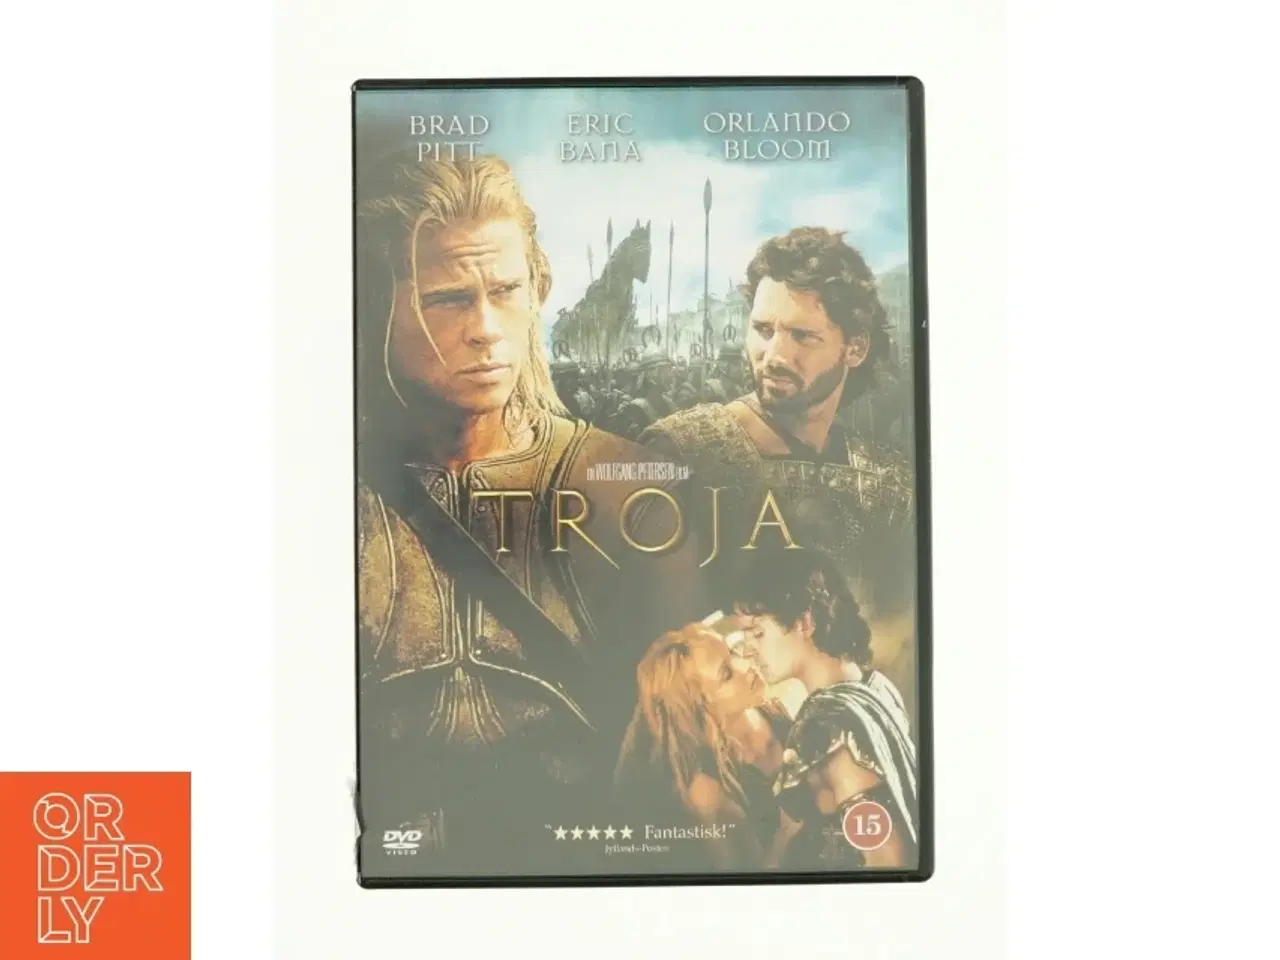 Billede 1 - Troja fra DVD